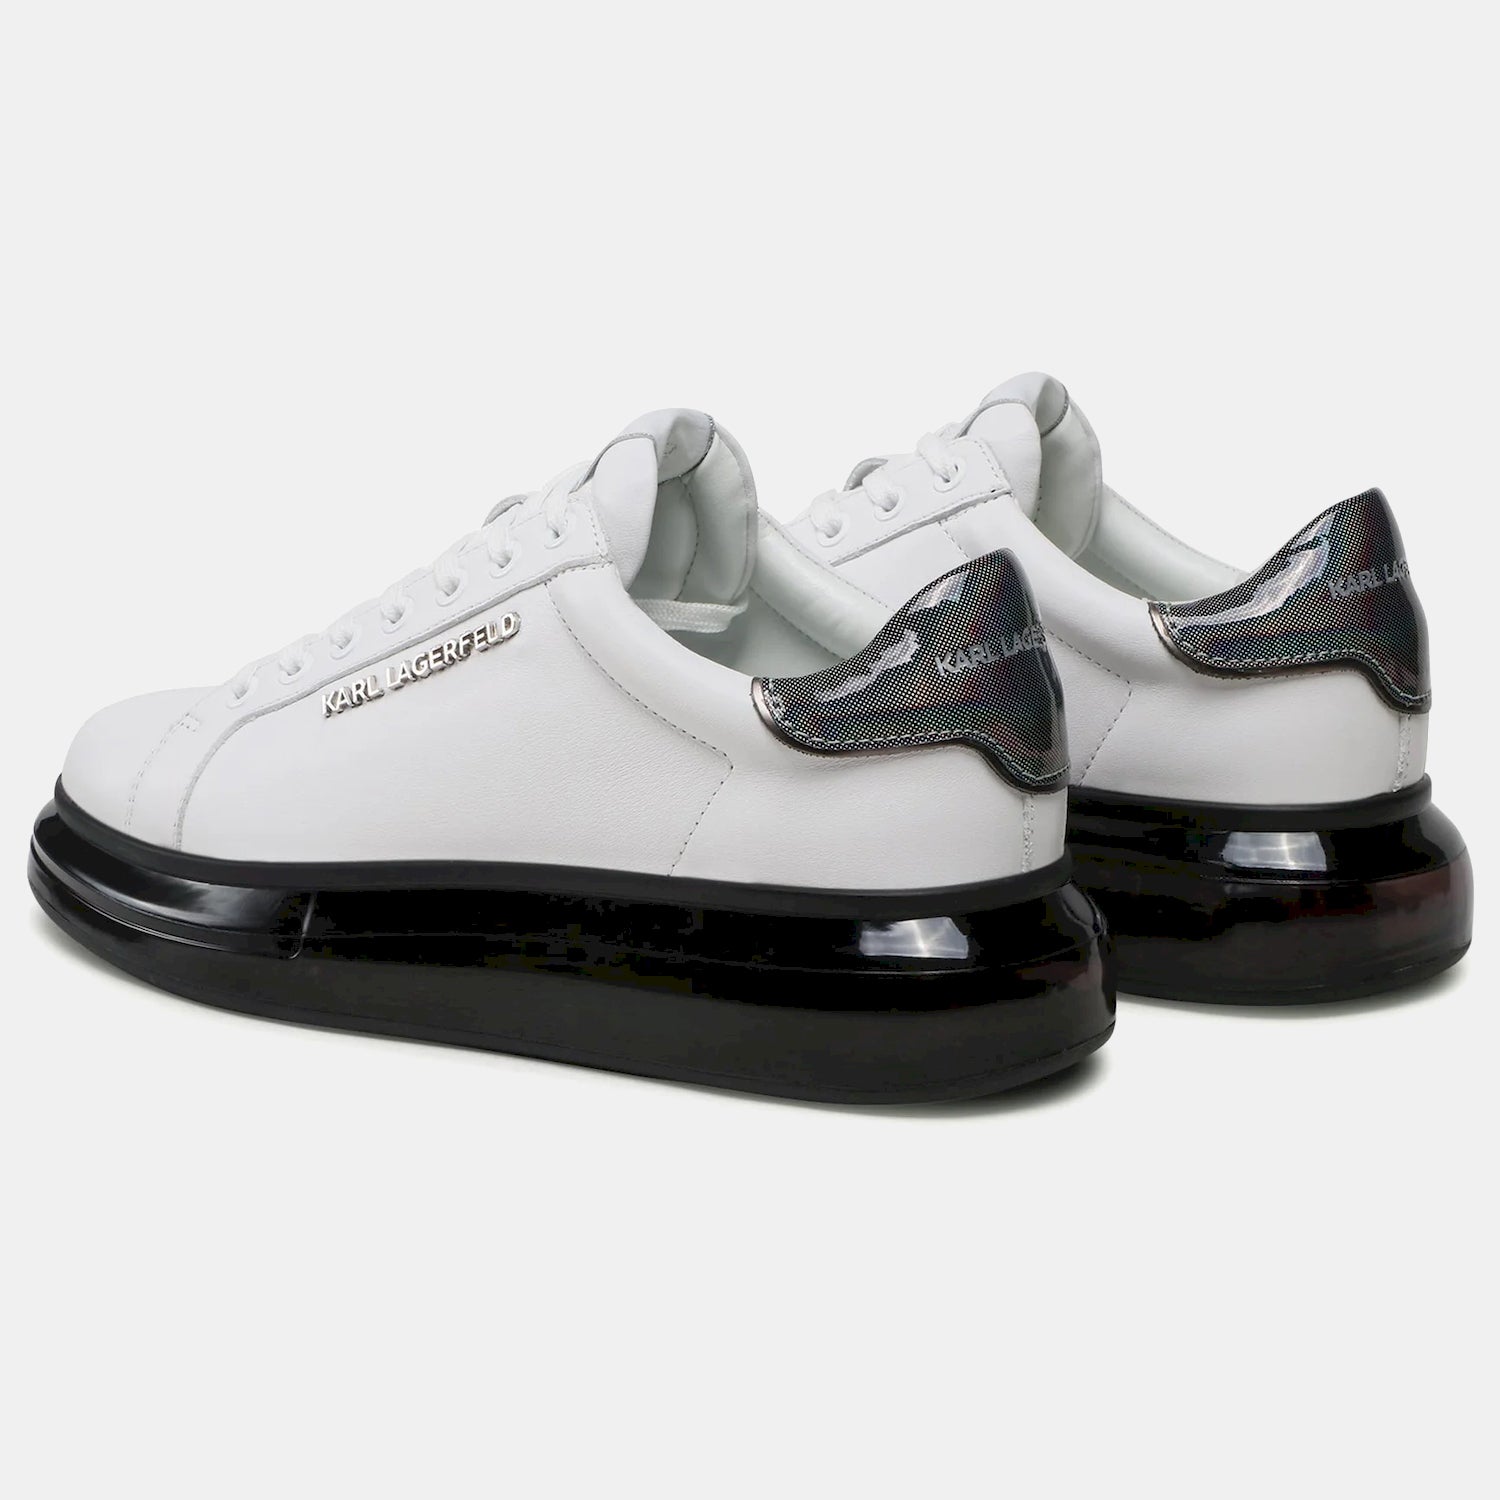 Karl Lagerfeld Sapatilhas Sneakers Shoes Kl52625 Whi Black Branco Preto_shot2